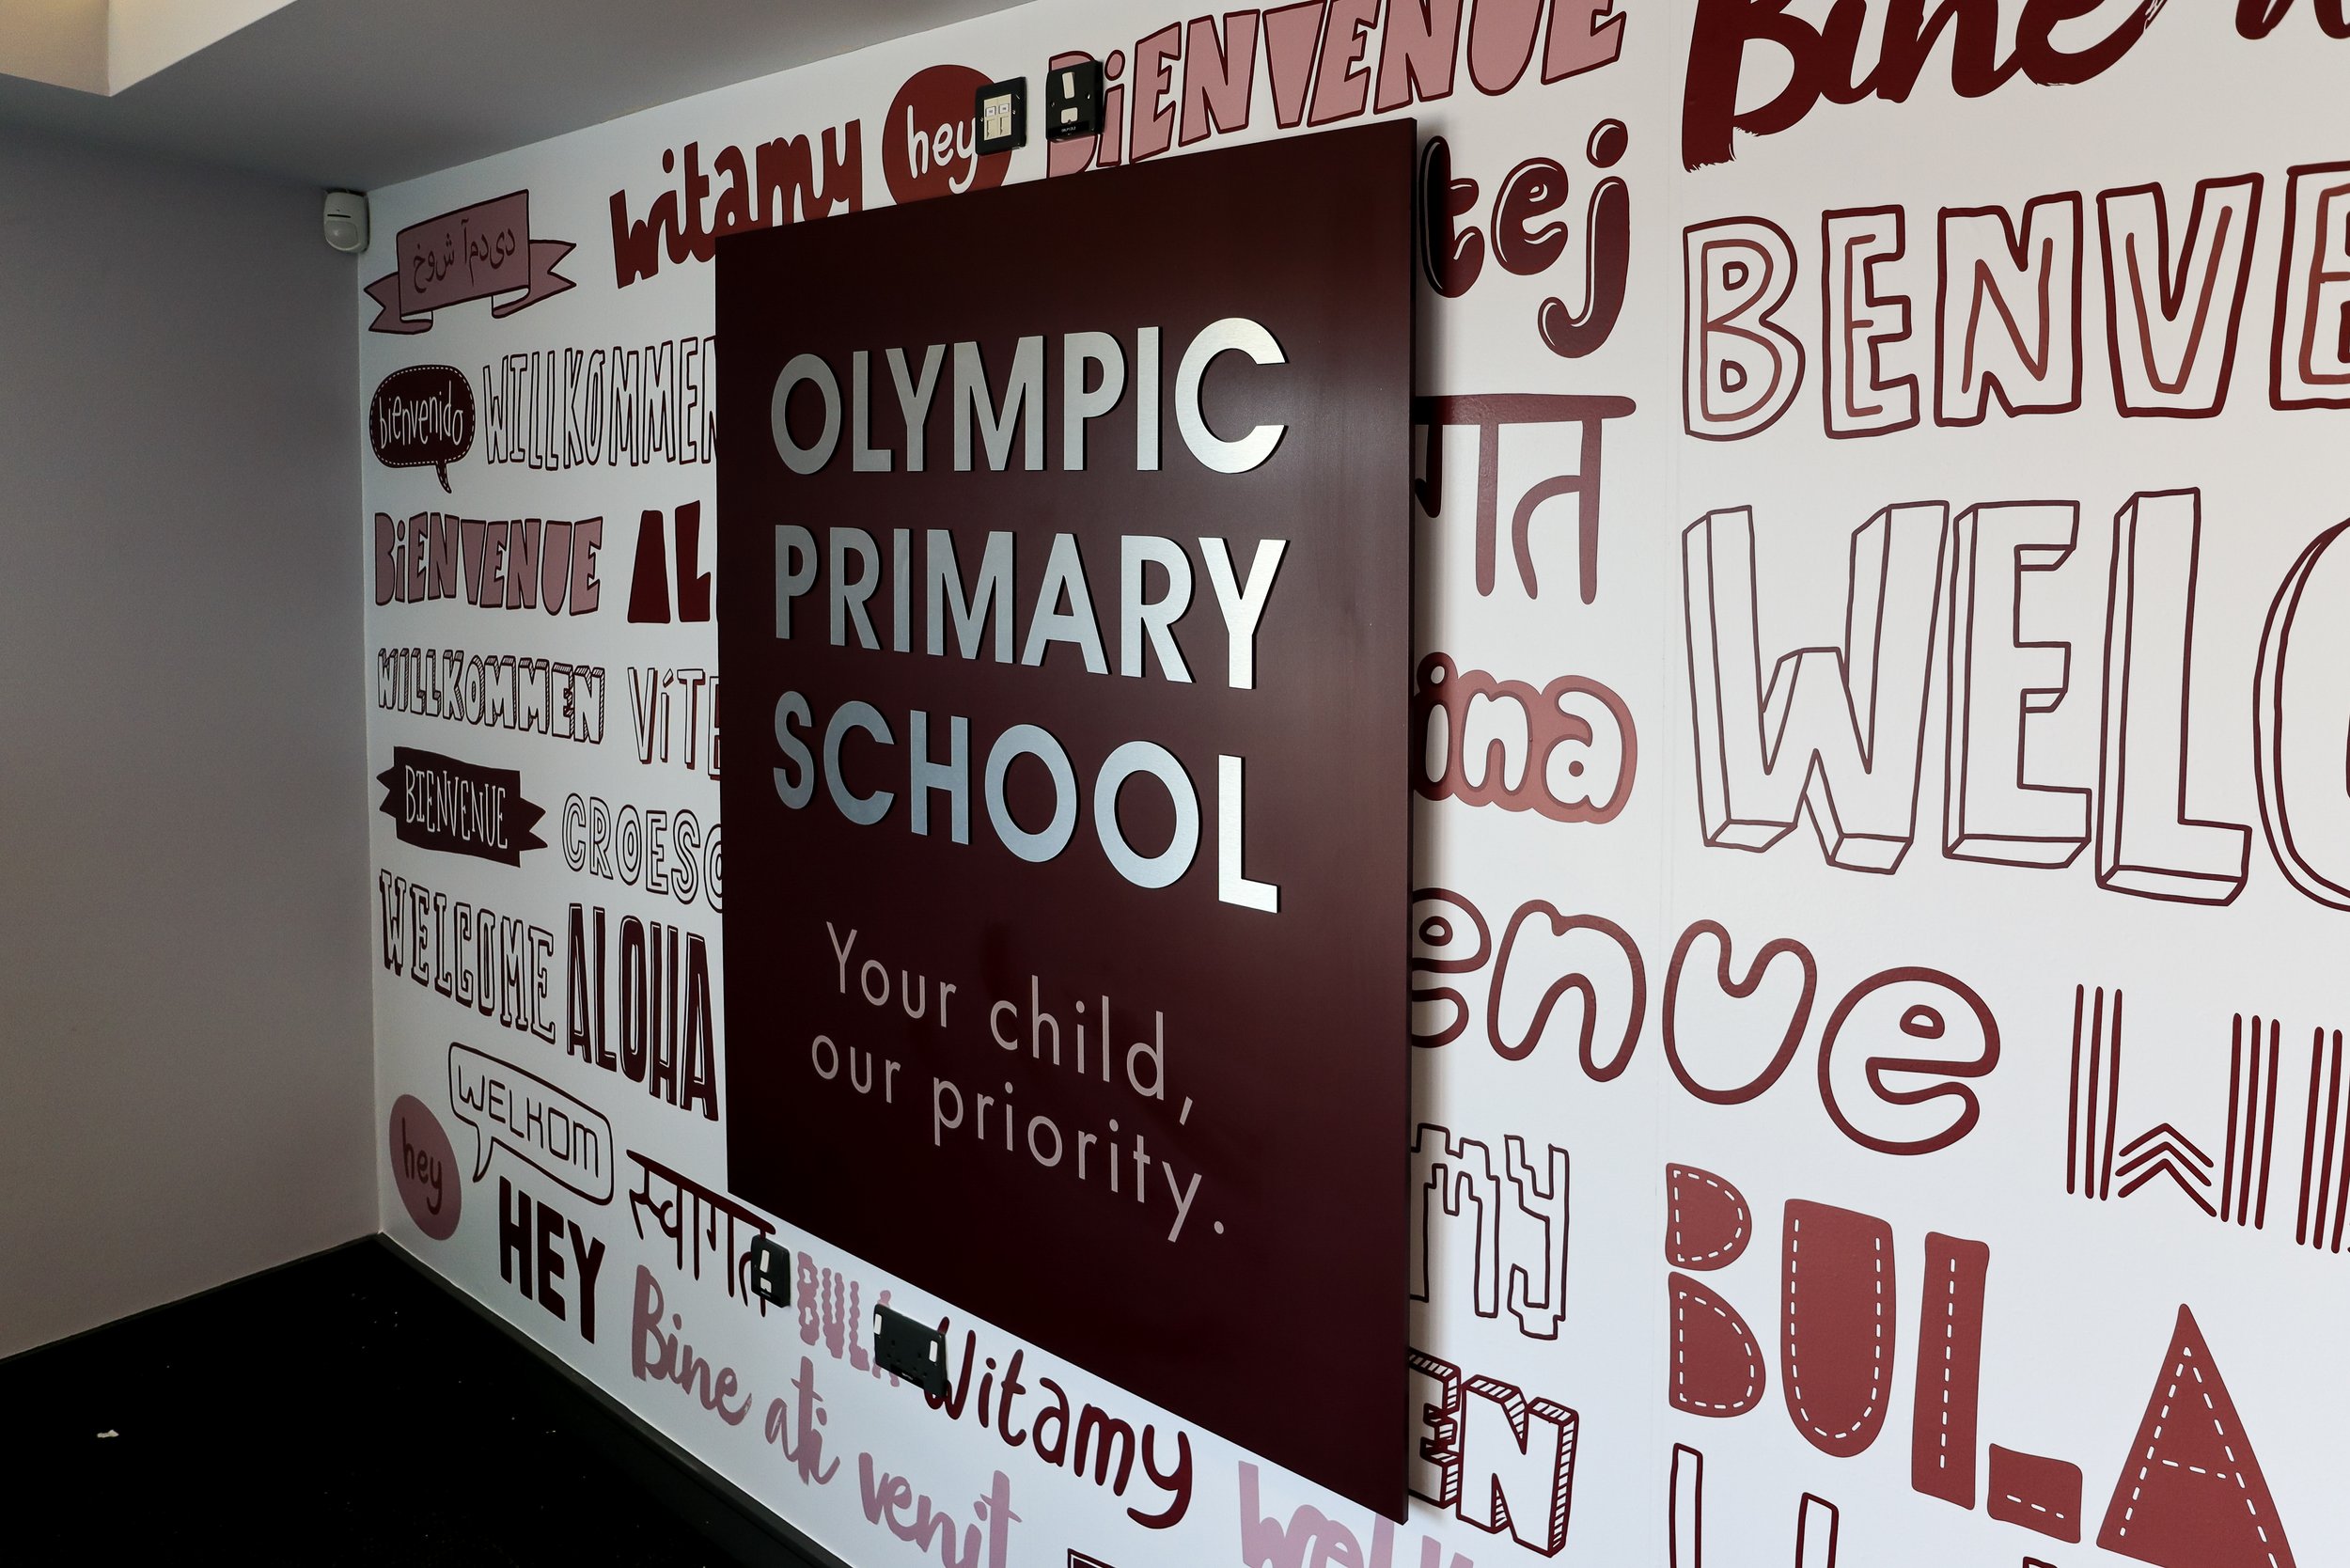 Olympic-Primary-School-Reception-Signage.jpg